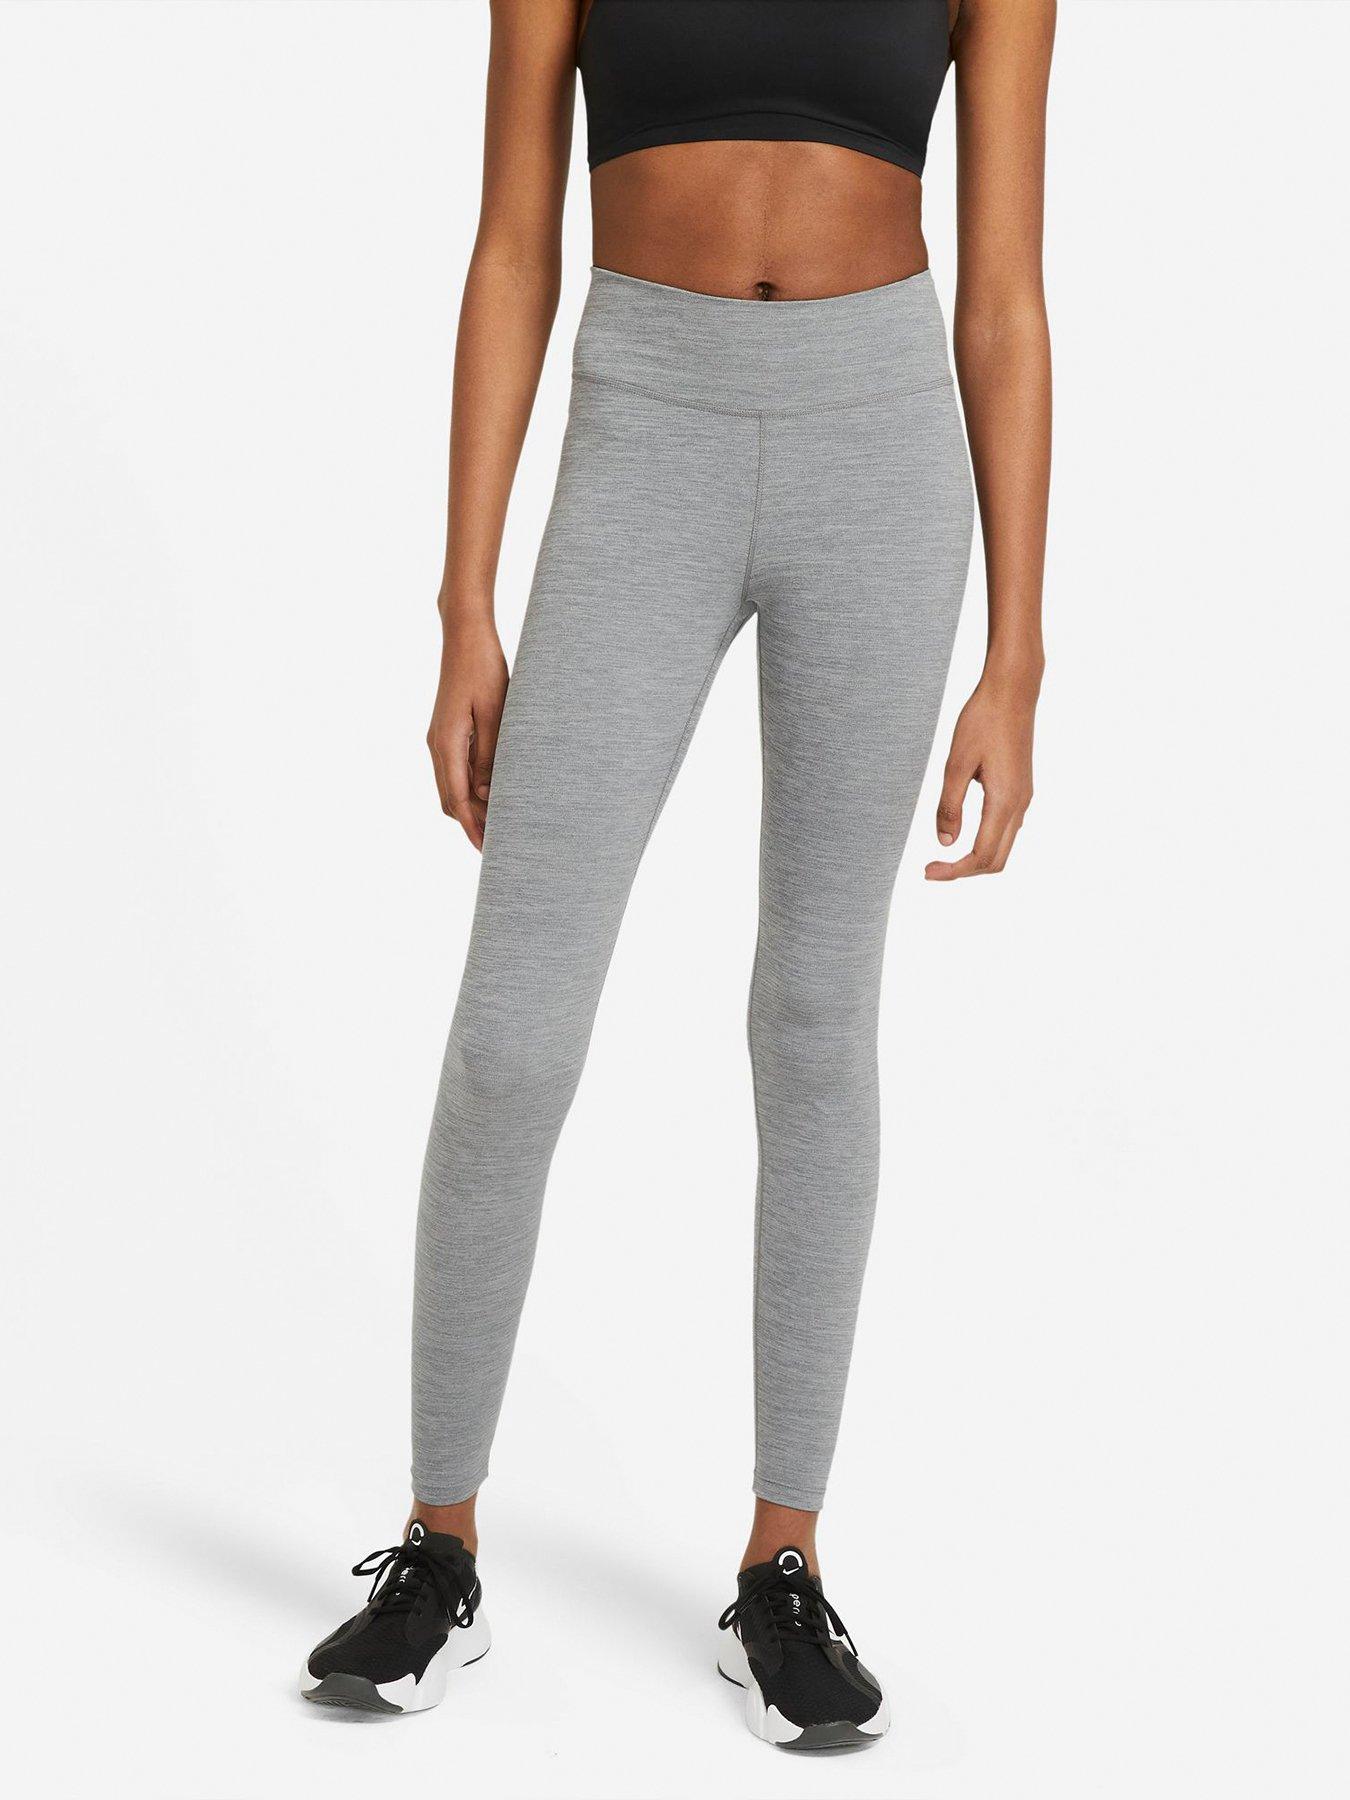 leopard print leggings, Nike